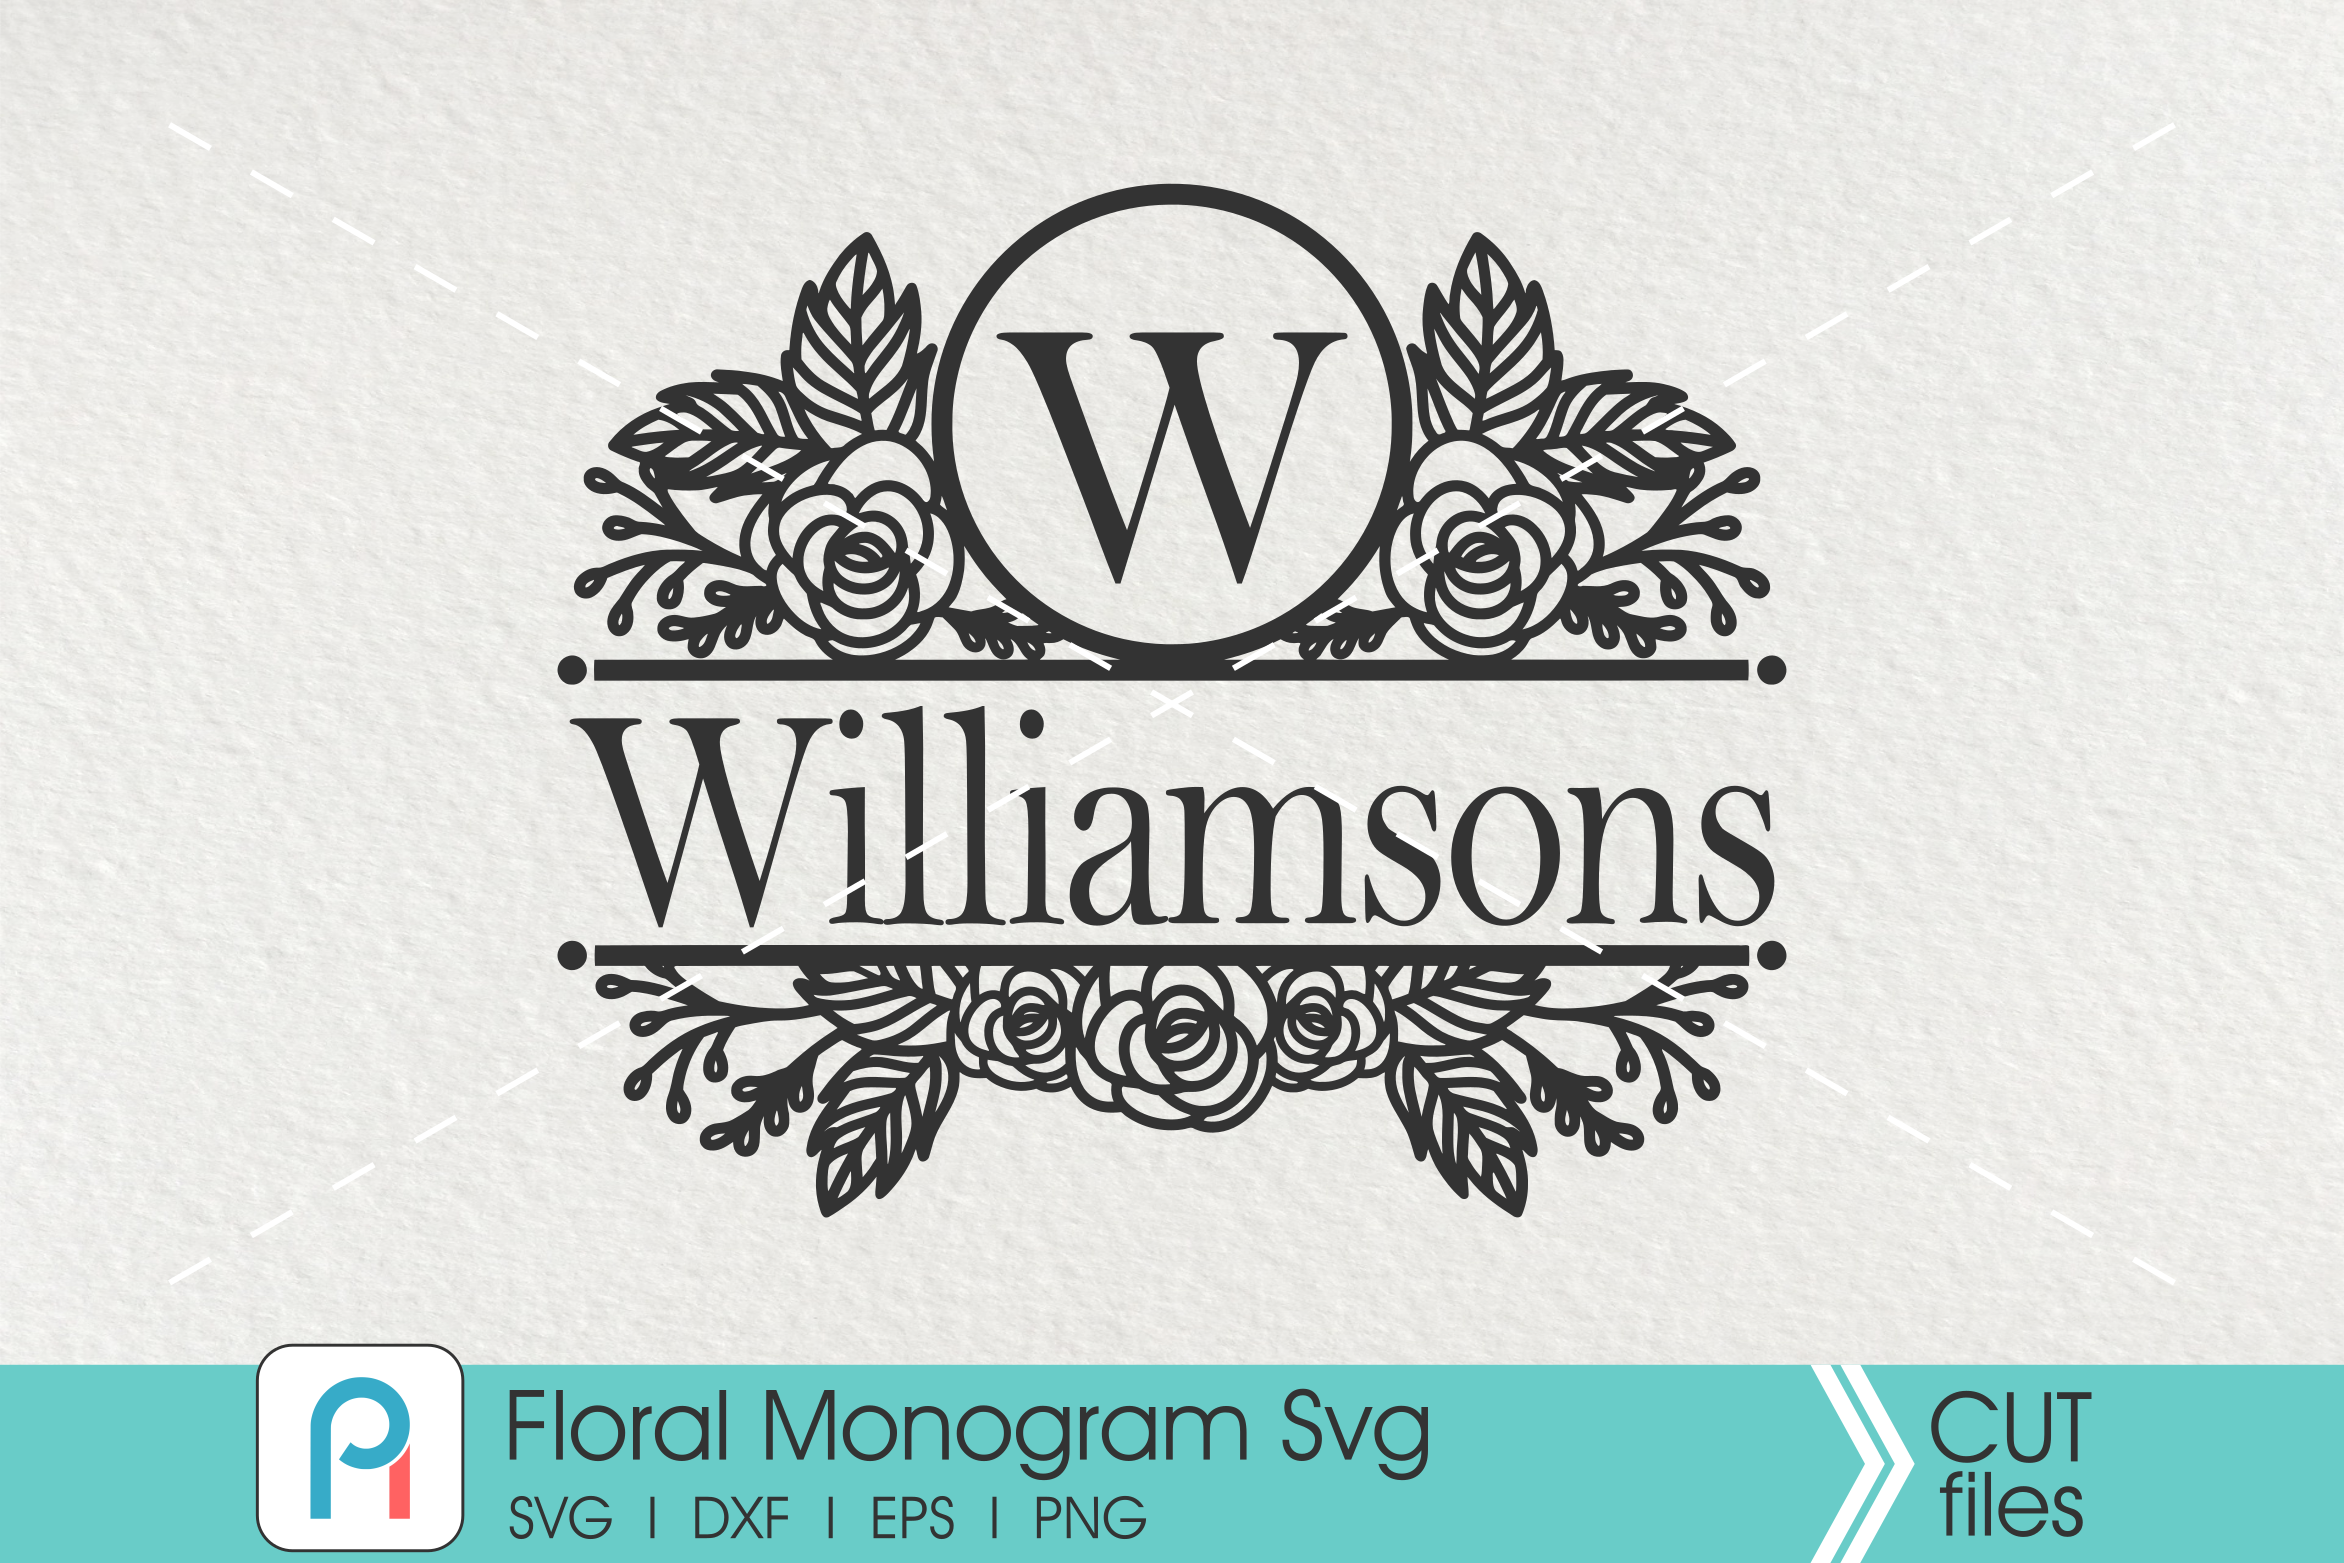 Download 31+ Free Floral Monogram Svg Pictures Free SVG files ...